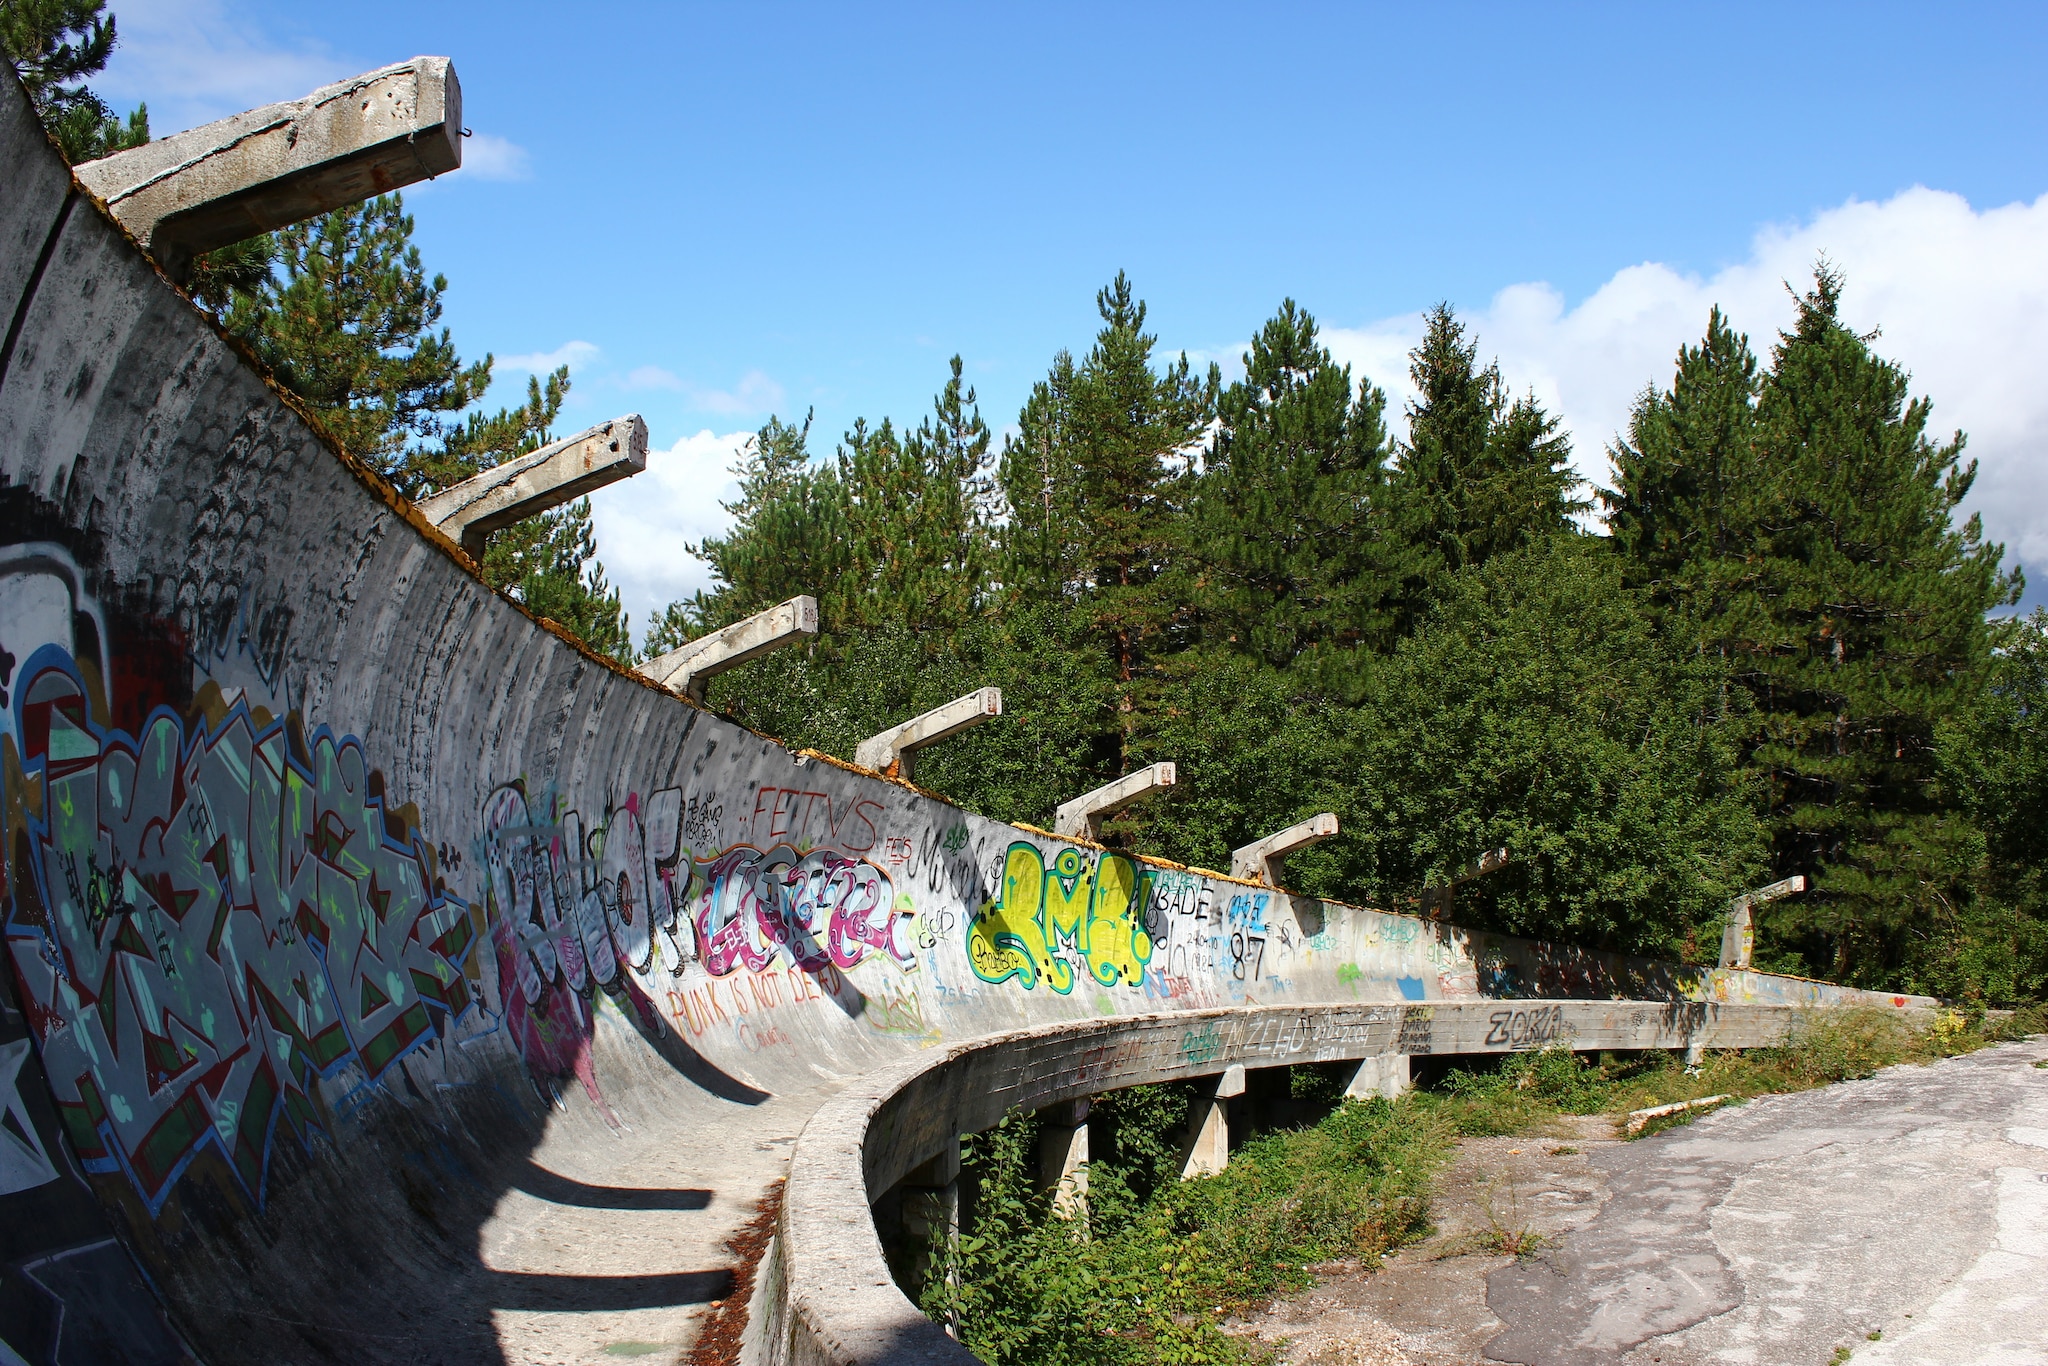 The abandoned bobsled track in Sarajevo. Photo Wikimedia Commons